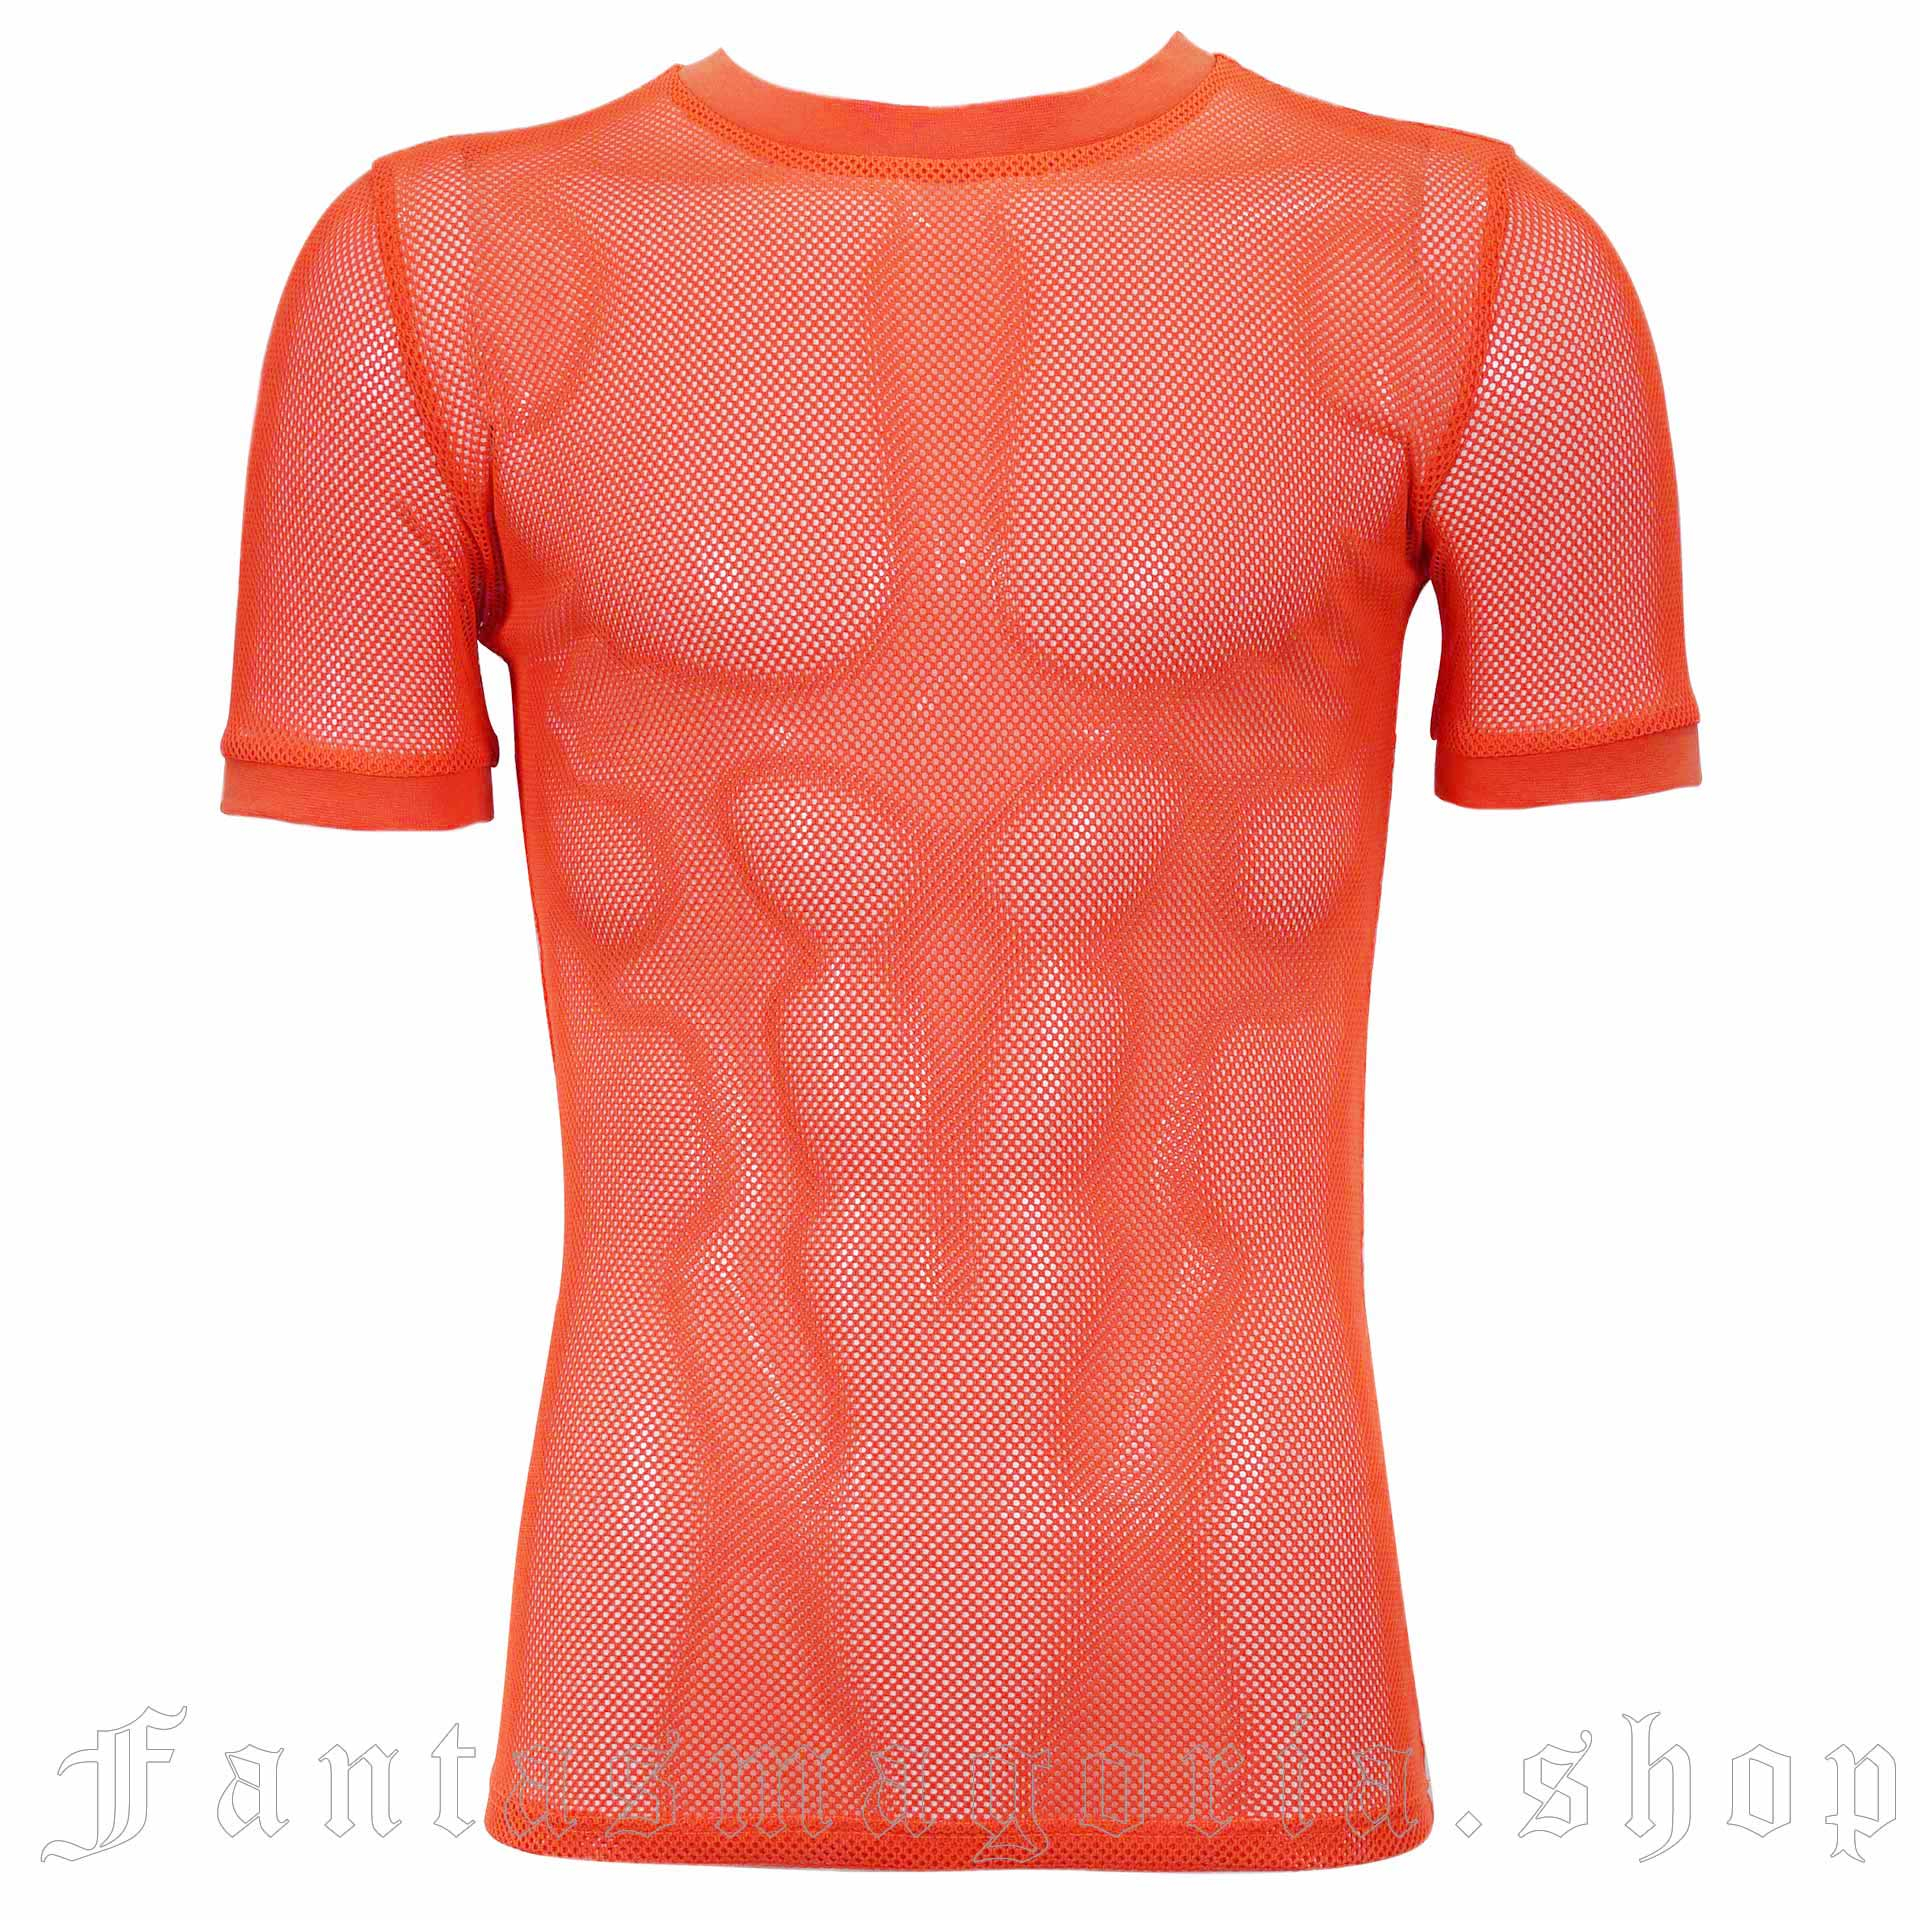 Agonoize Unisex Orange Top - Devil Fashion - TT03902/OR 1